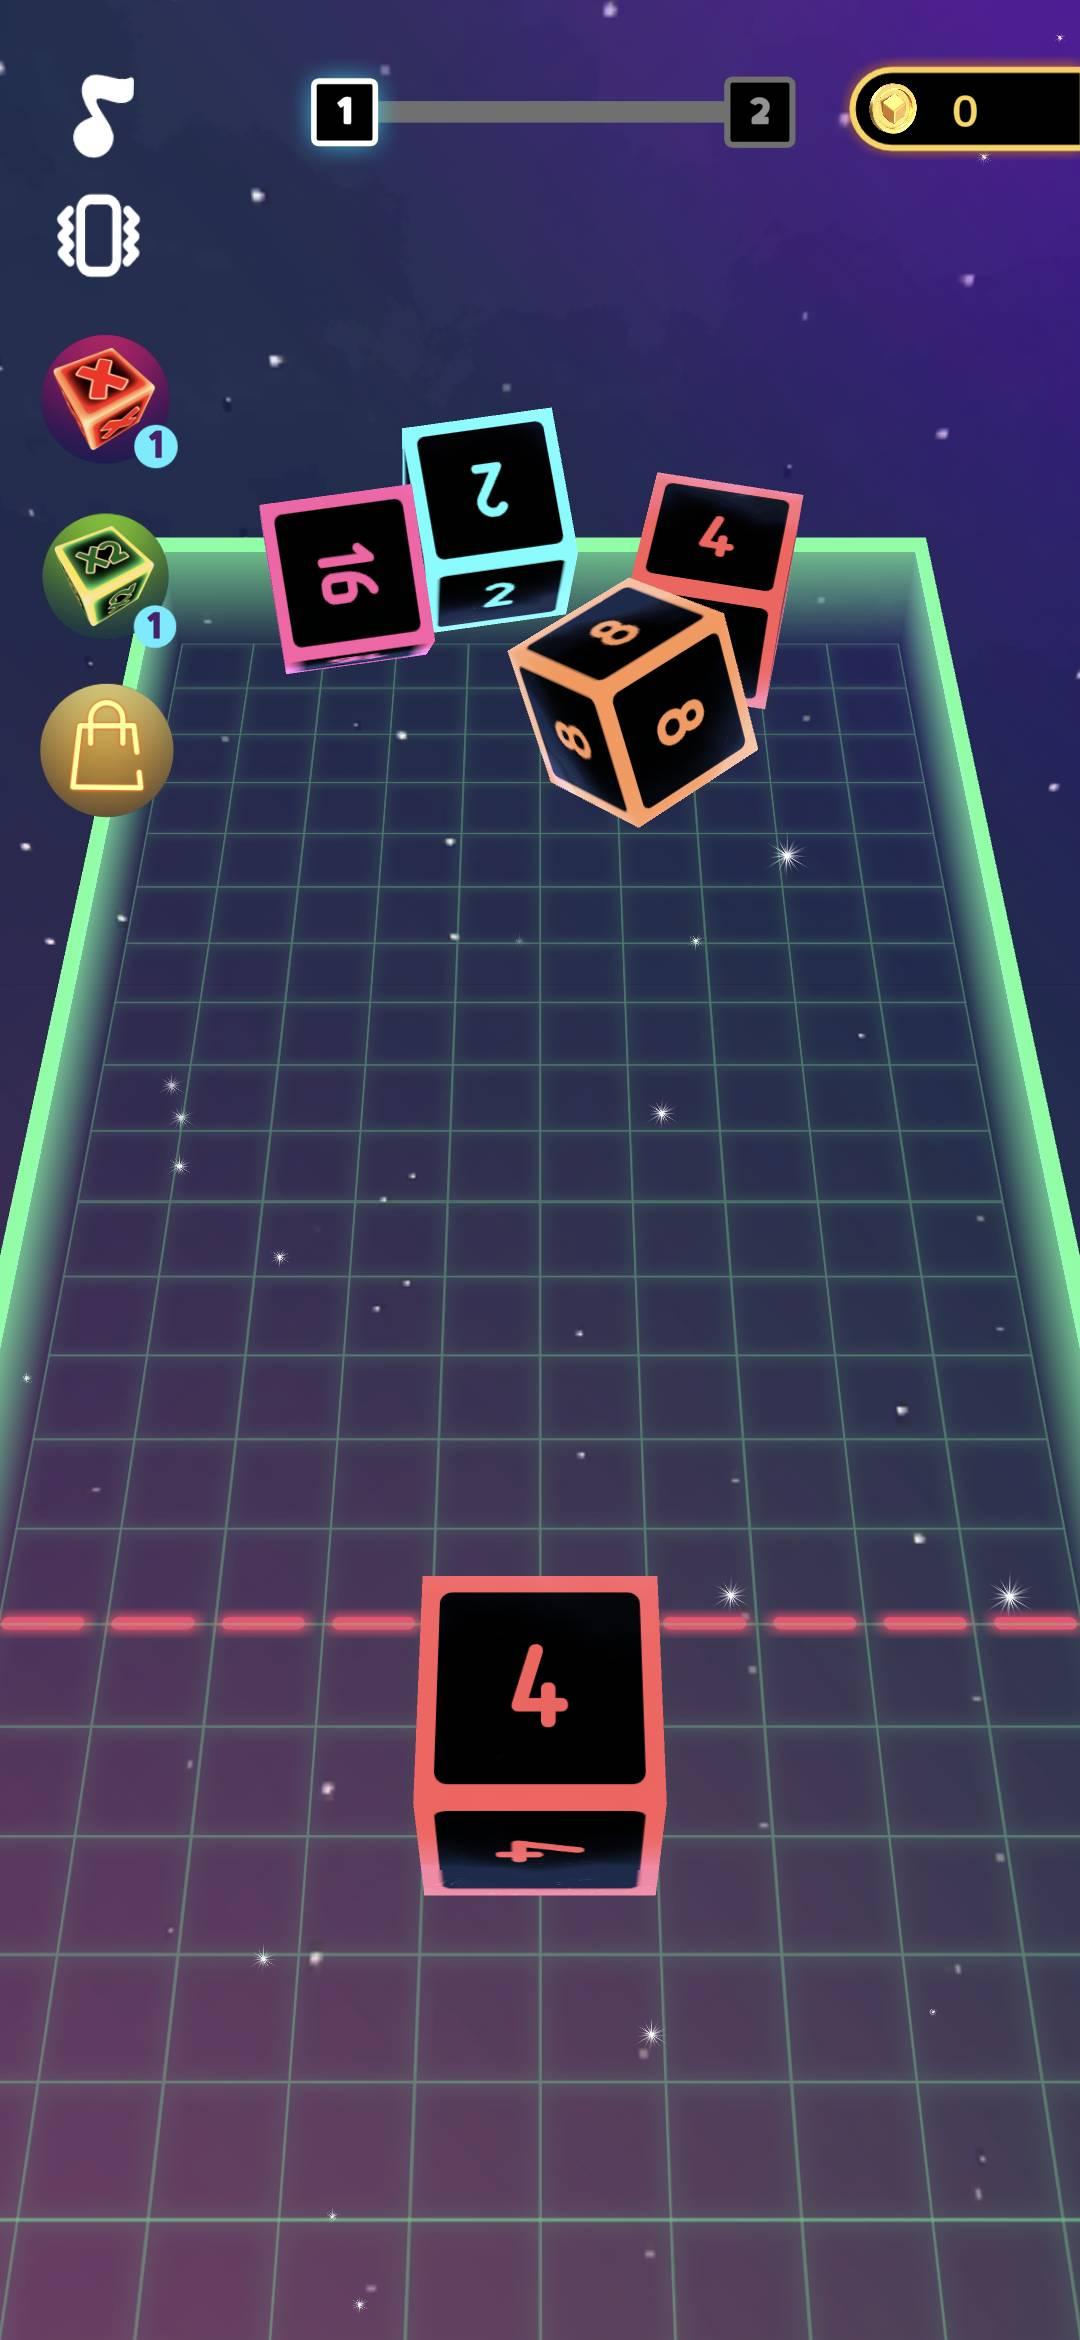 Jelly cube run